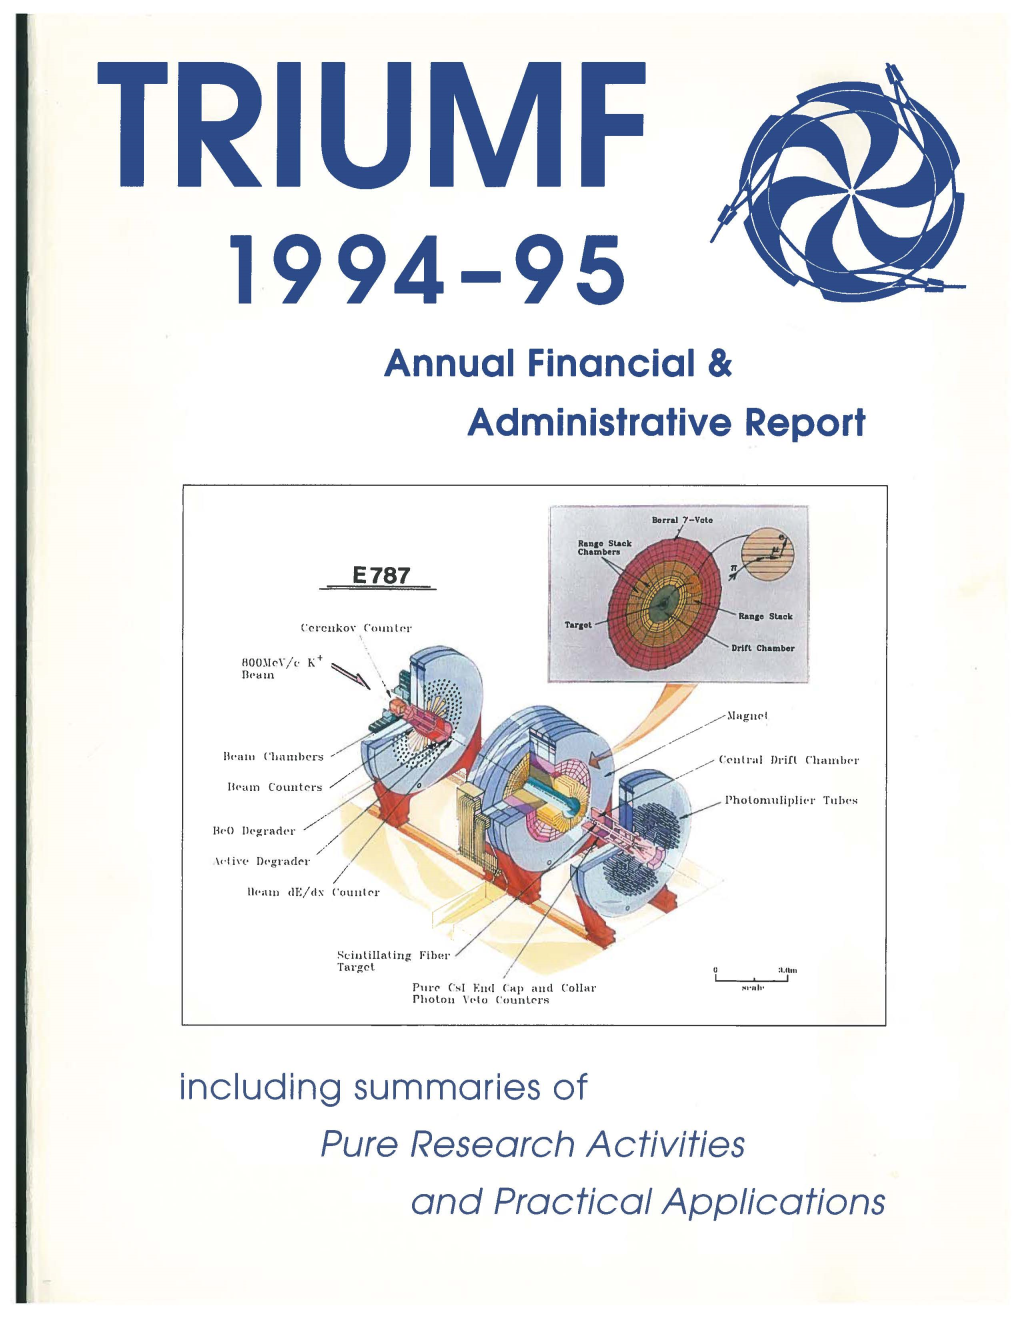 Annual Financial & Administrative Report